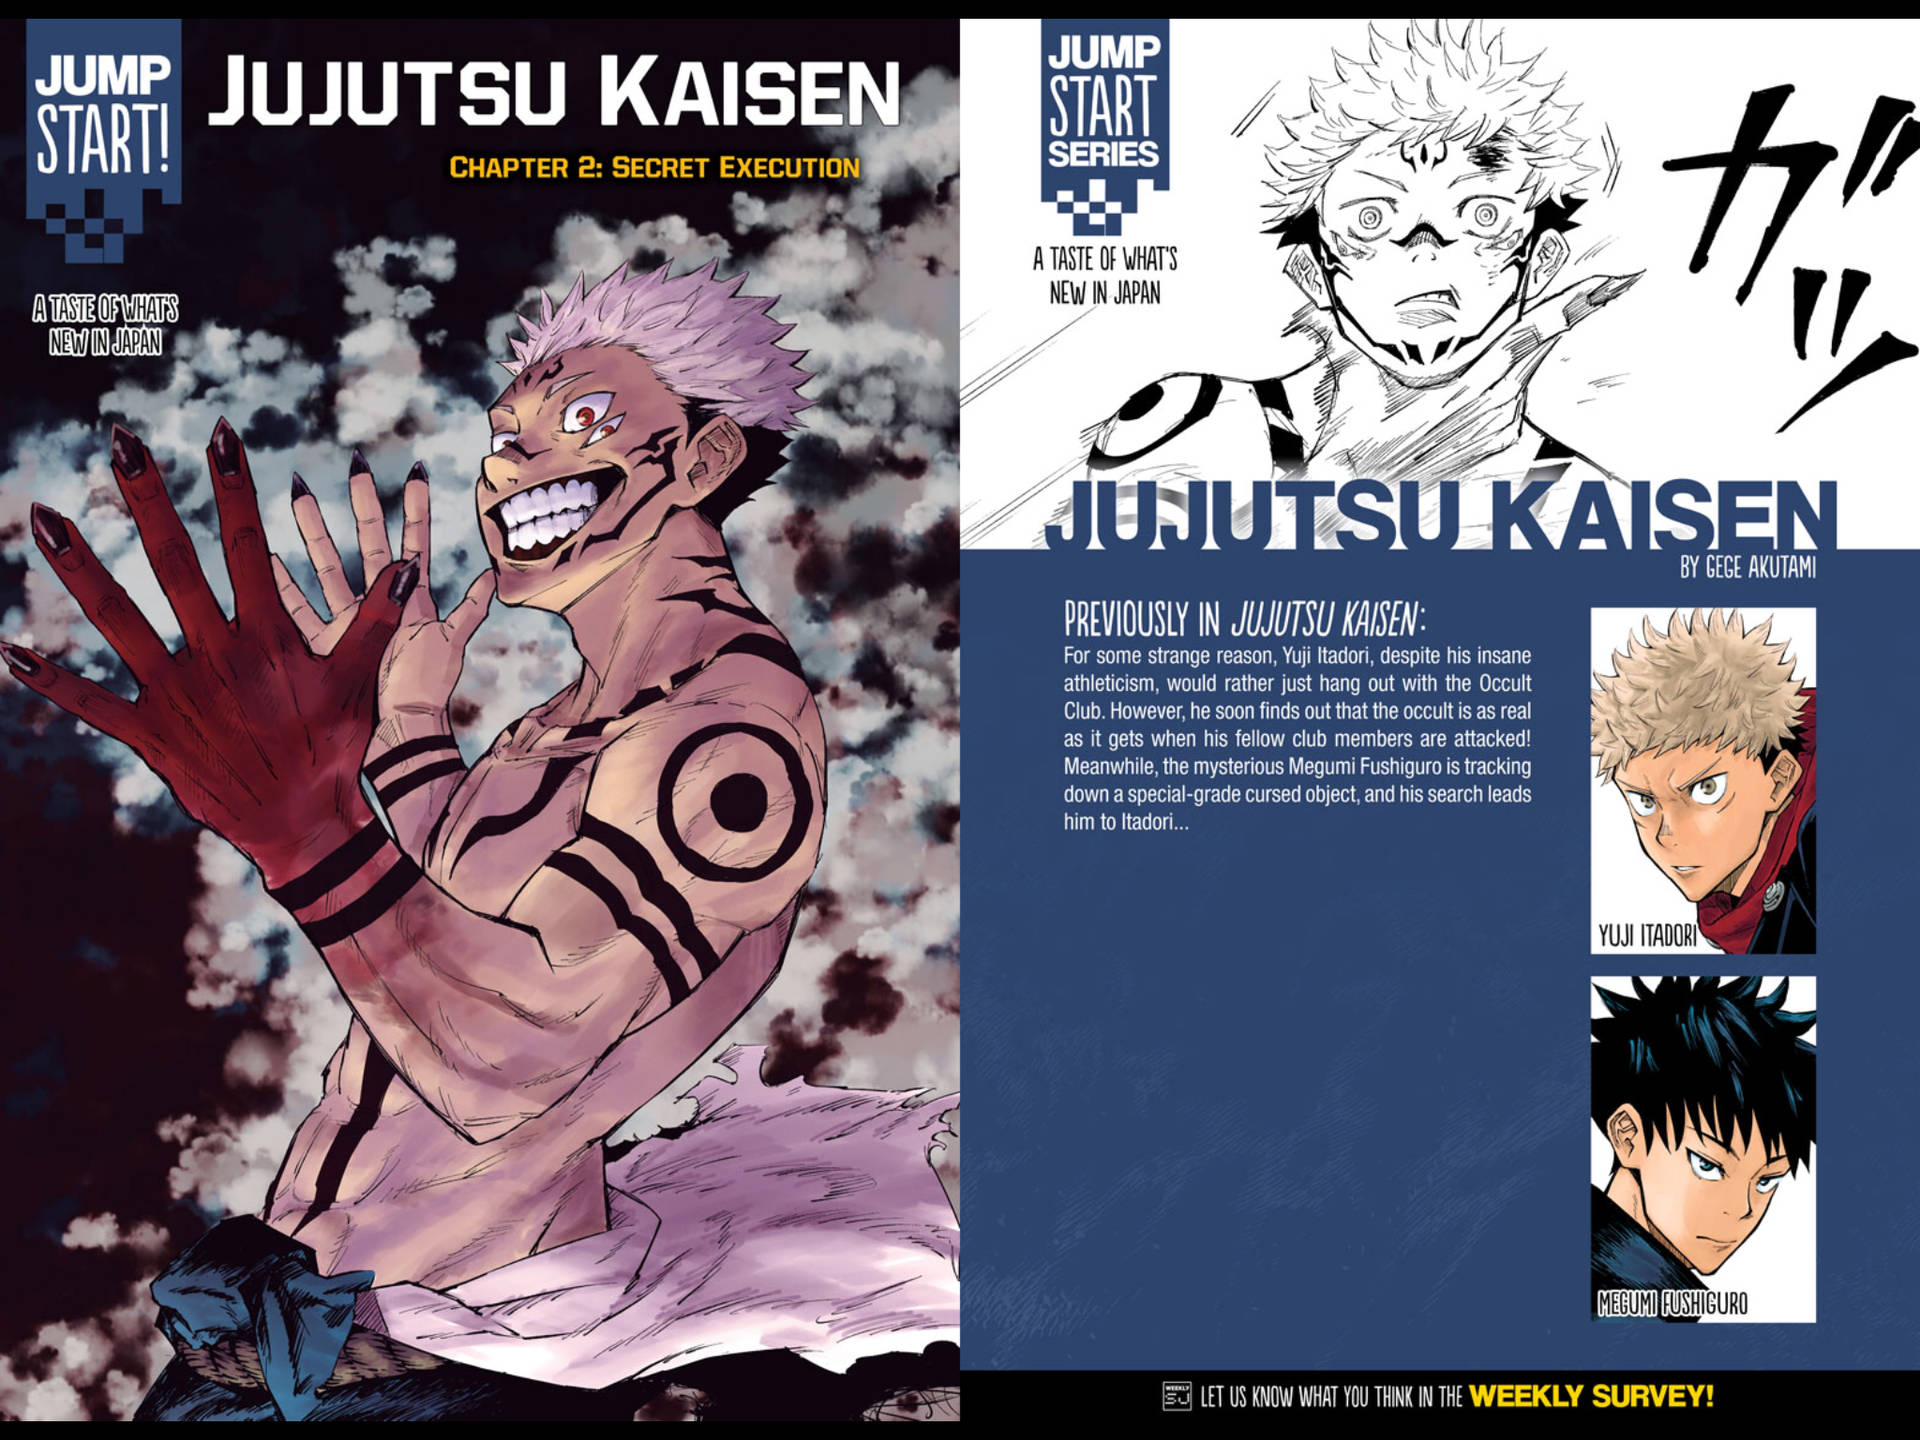 Jujutsu Kaisen 2048X1536 Wallpaper and Background Image